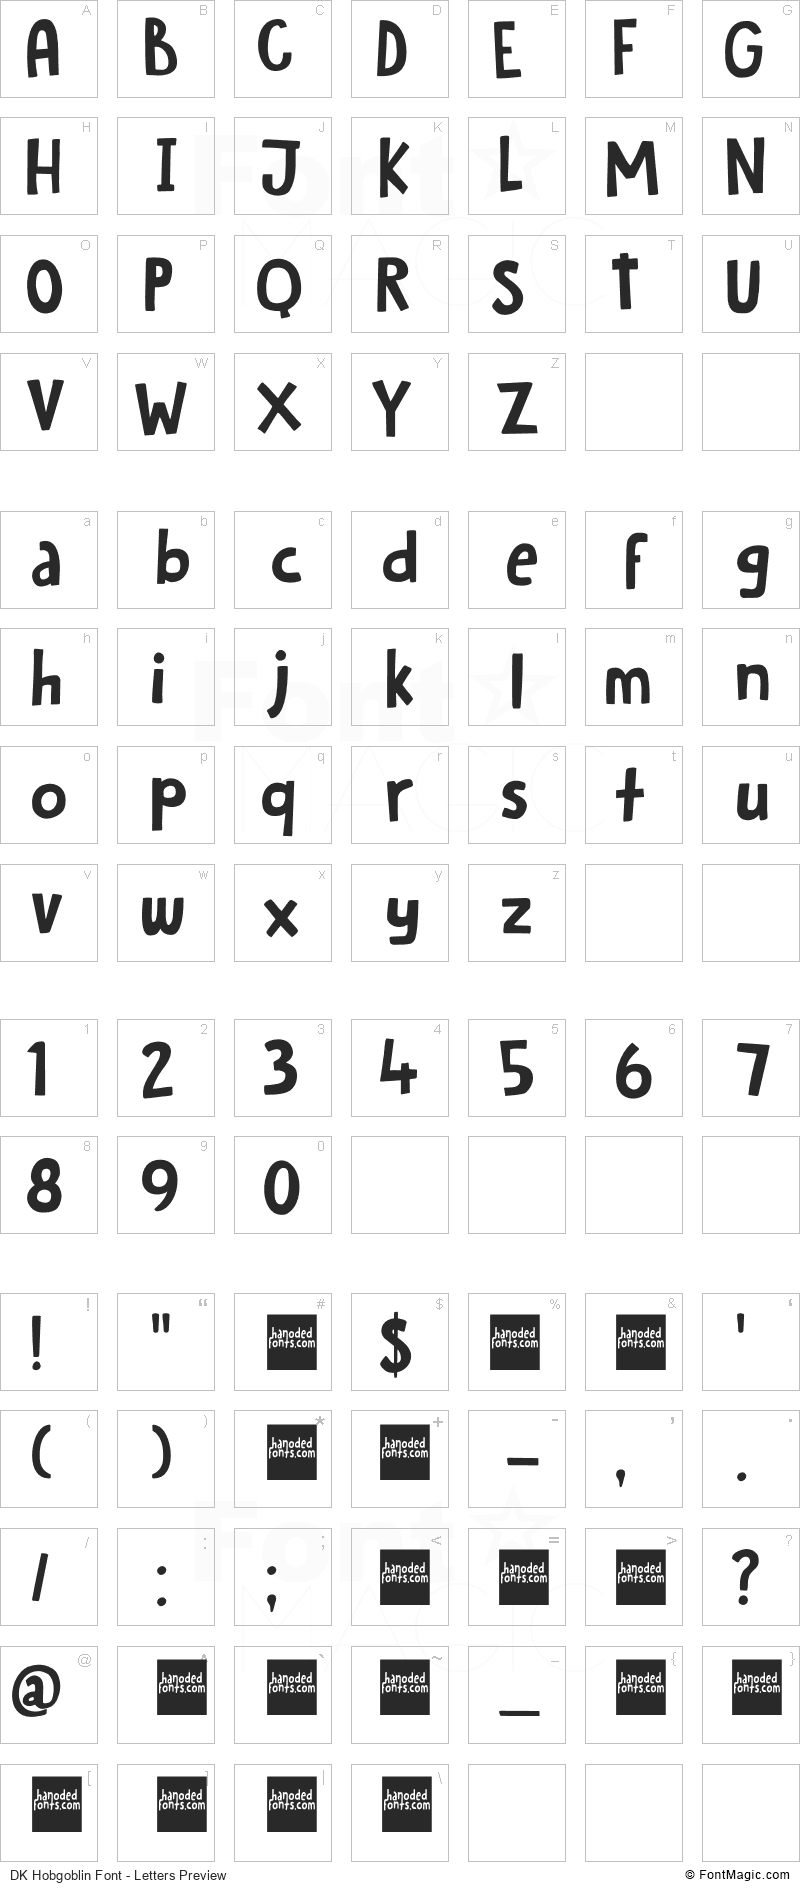 DK Hobgoblin Font - All Latters Preview Chart